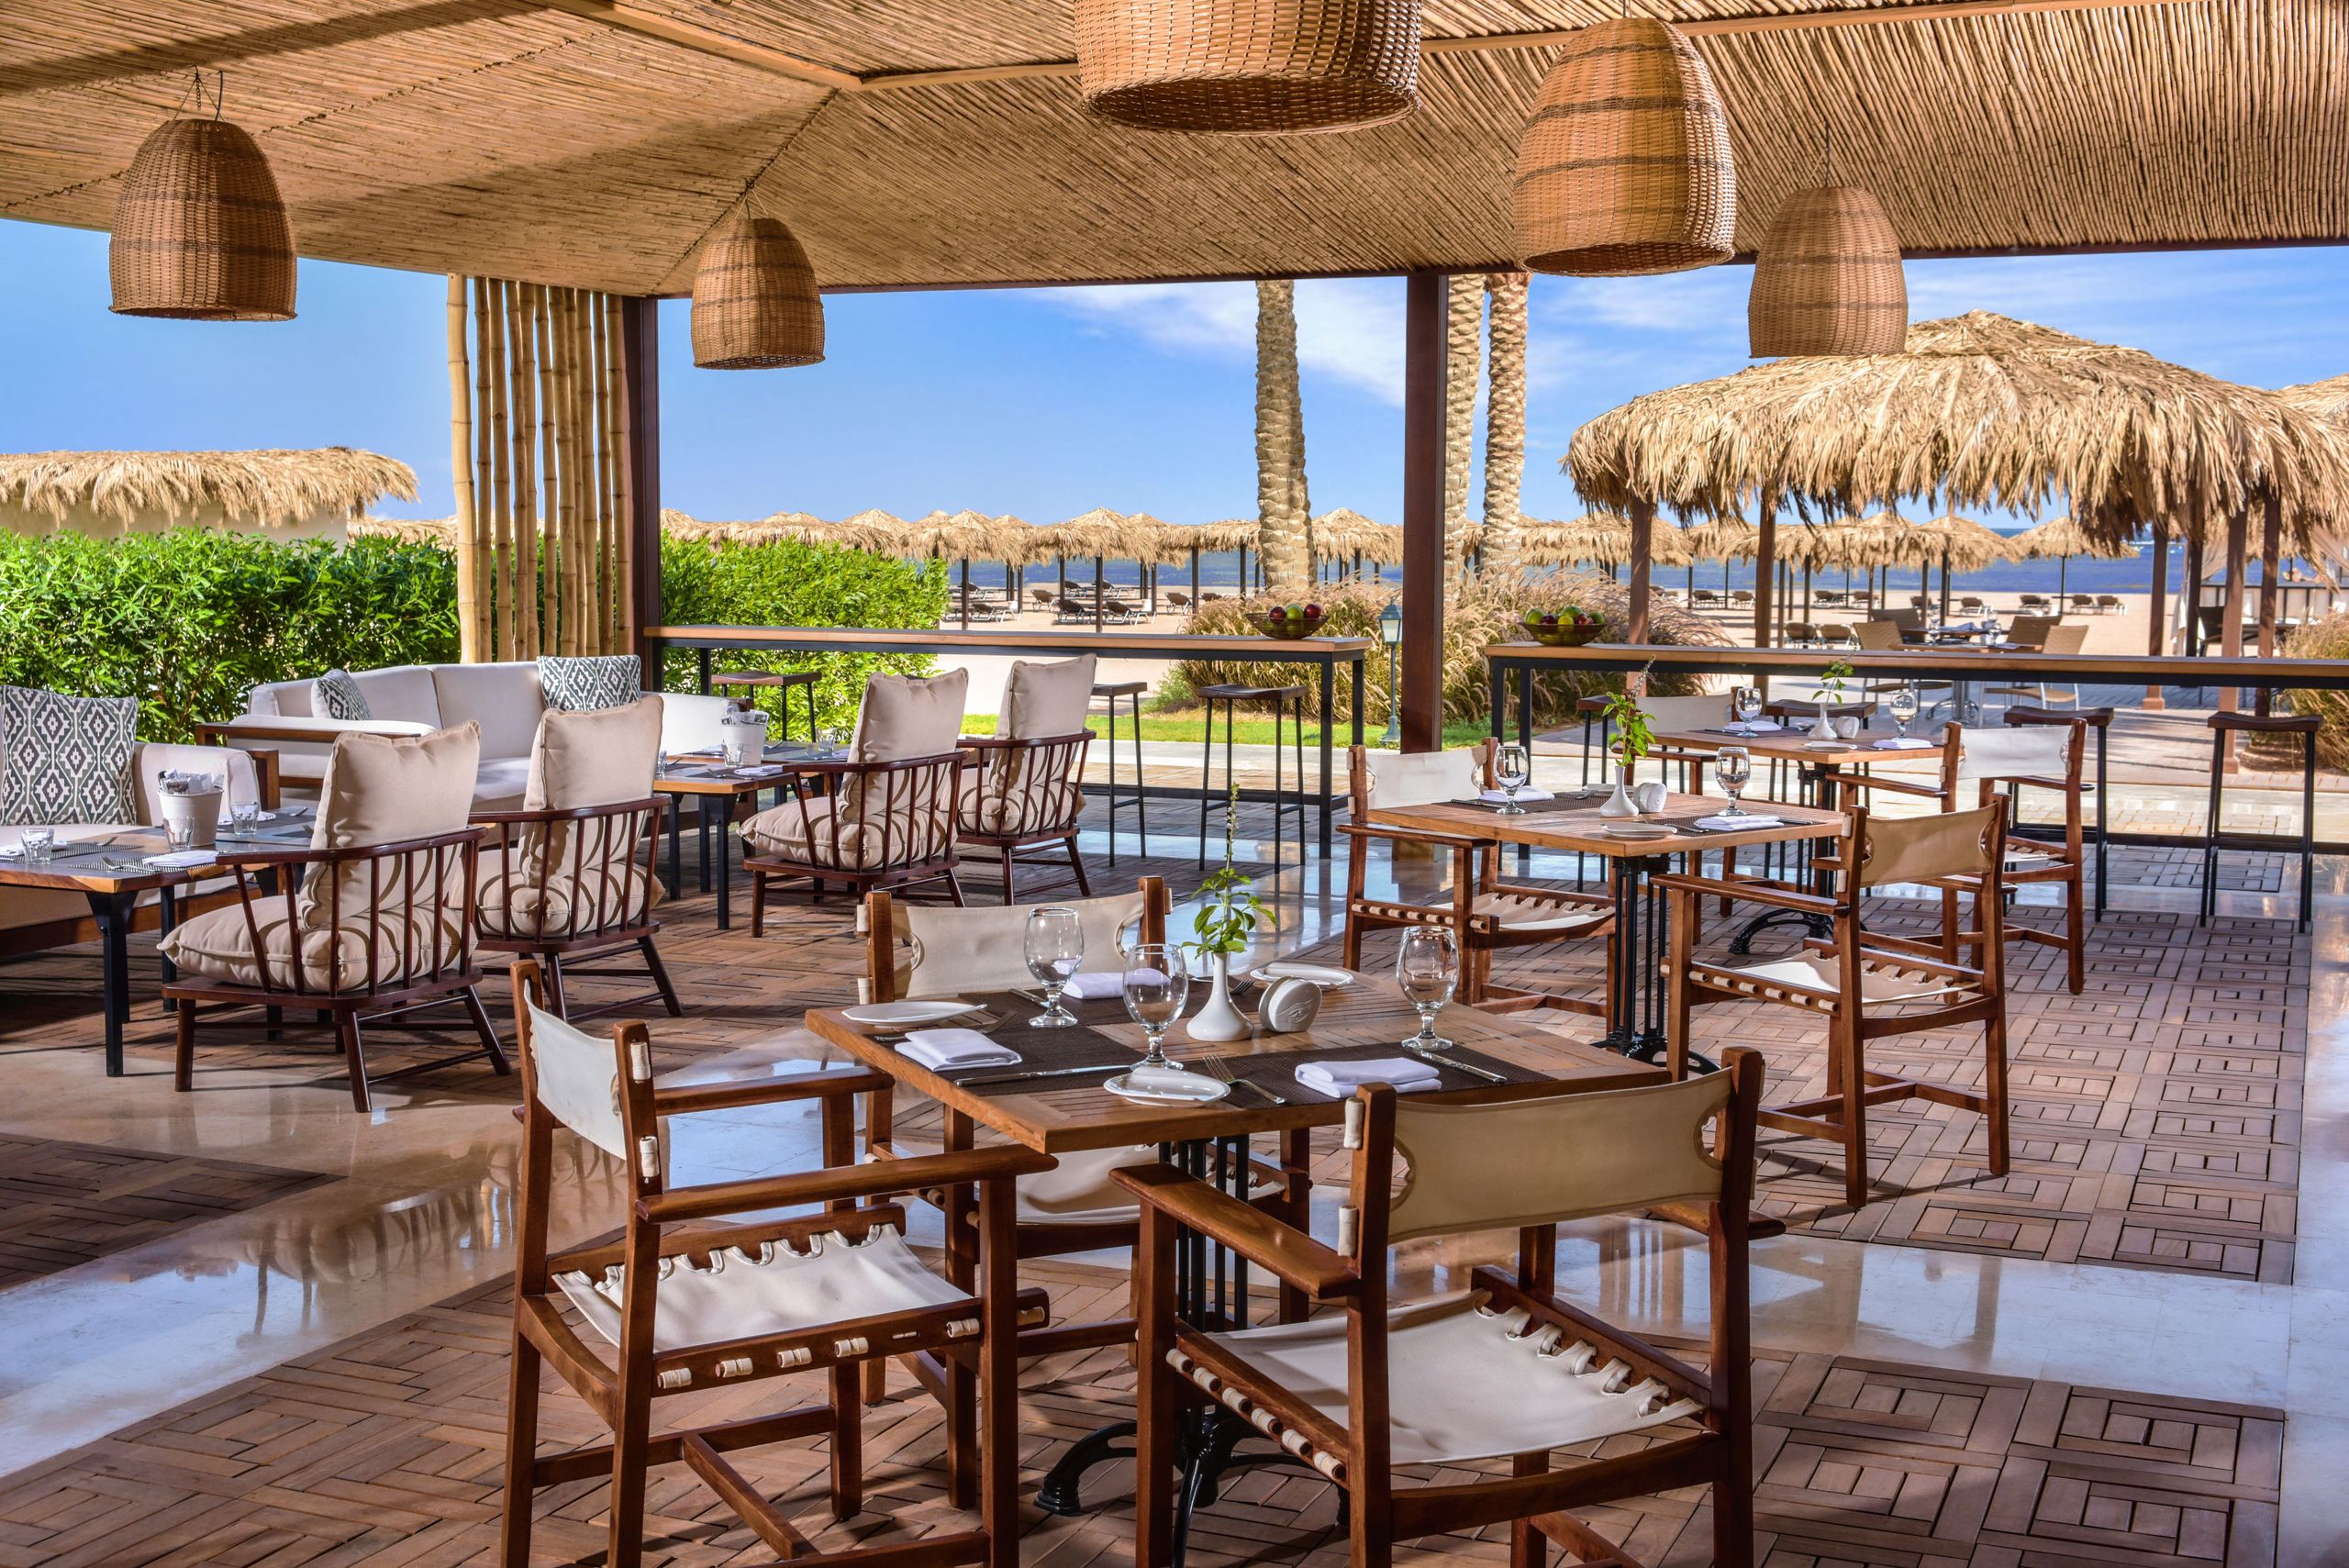 Steigenberger Alcazar, Sharm El Sheikh, Egypt - Sanafir Restaurant and Beach Bar